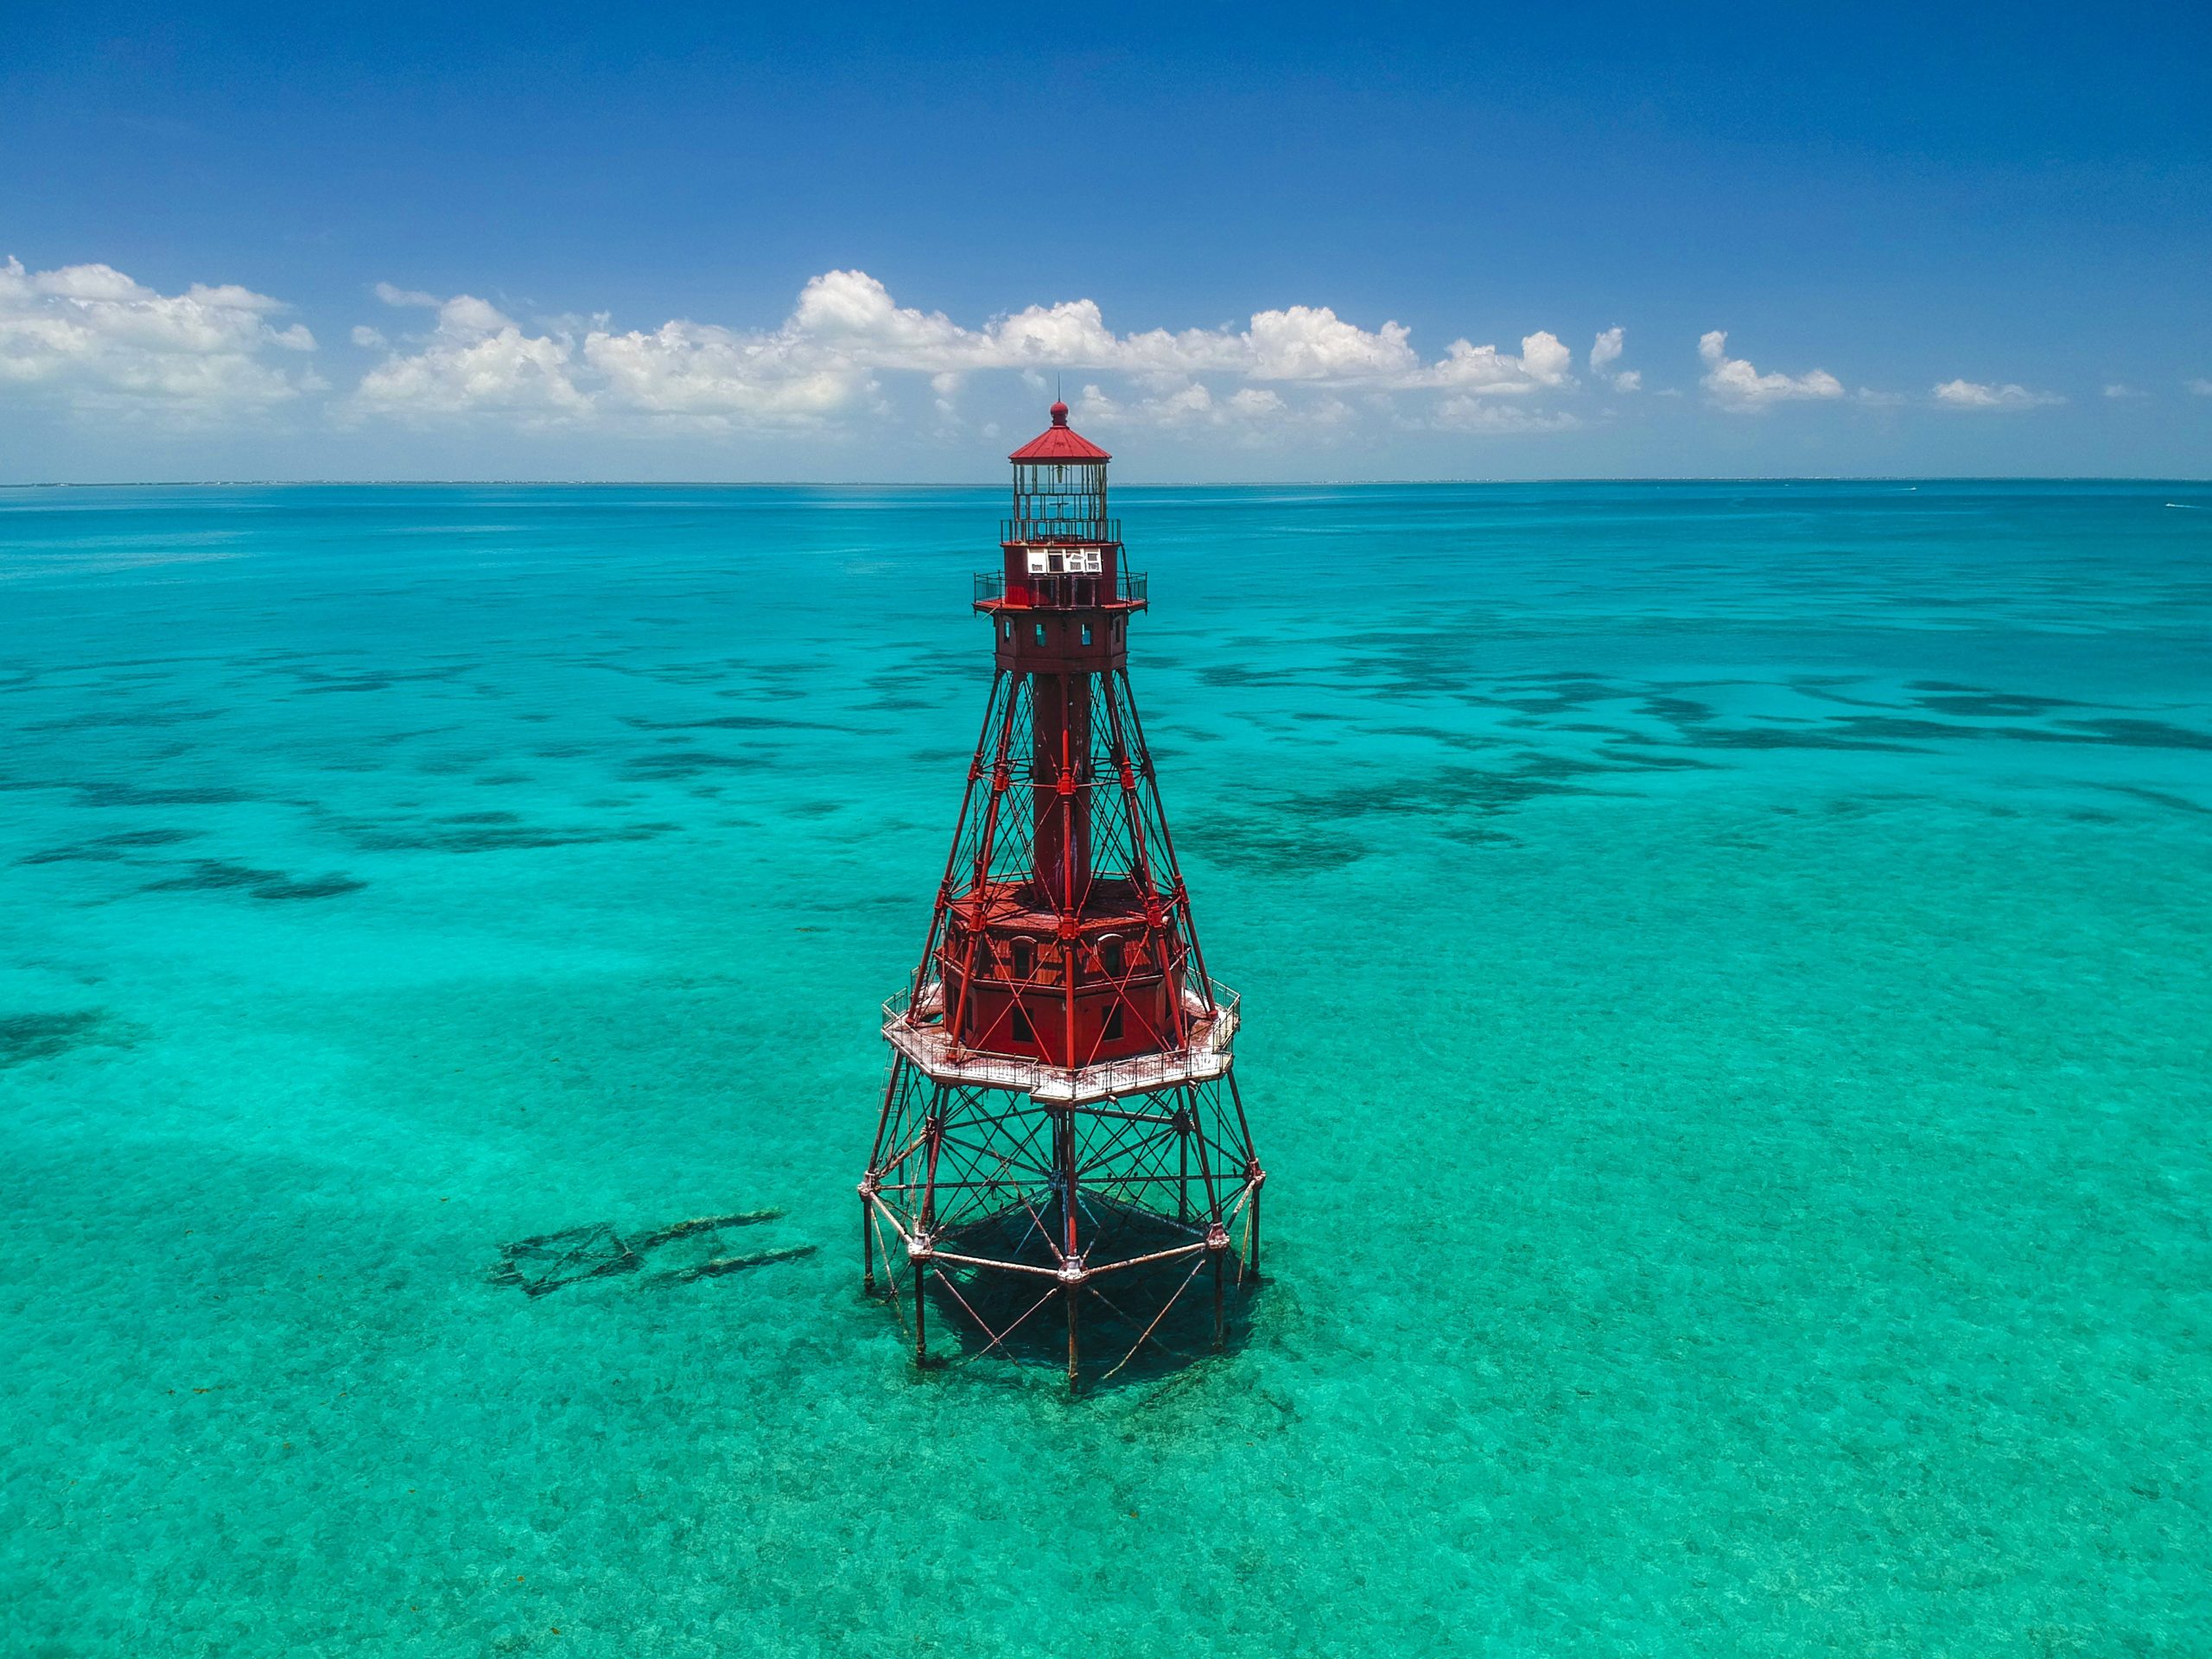 Florida Keys National Marine Sanctuary